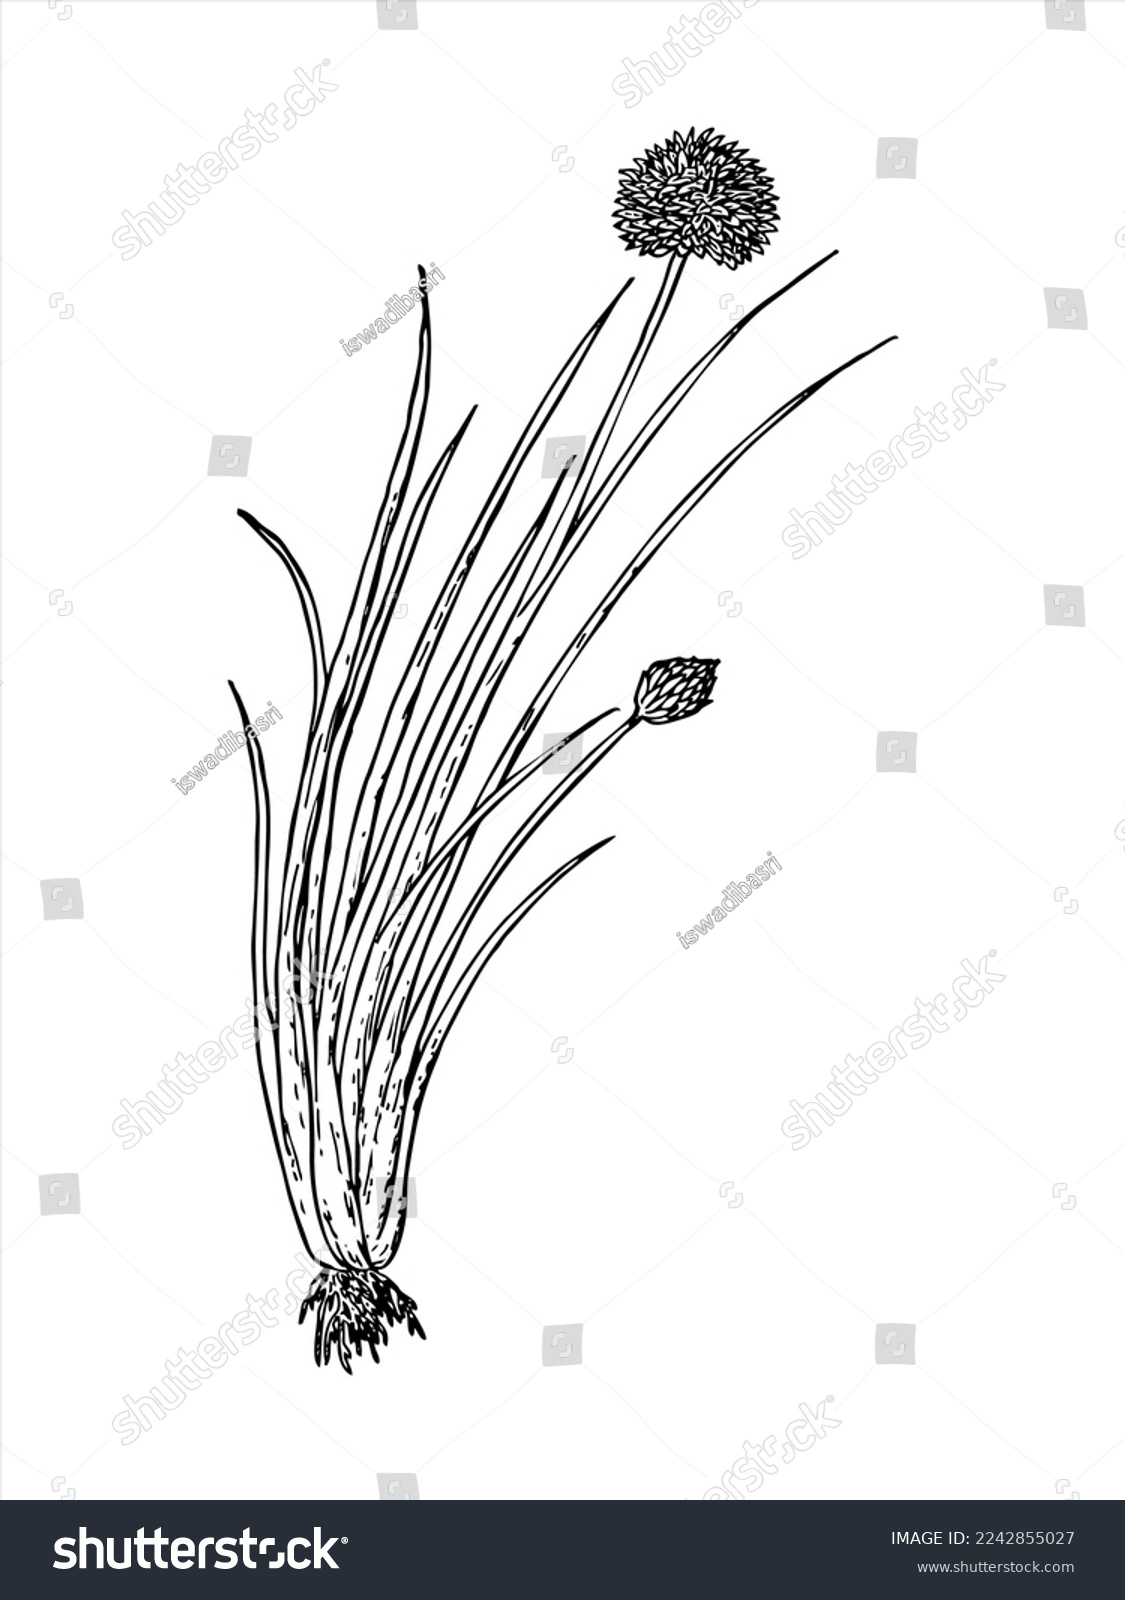 SVG of Chives illustration, drawing, engraving, ink, line art, vector. Bulb  Stem Vegetable, Illustration of Hand Drawn Sketch Flowering Garlic Chives or Allium Tuberosum Isolated on White Background svg